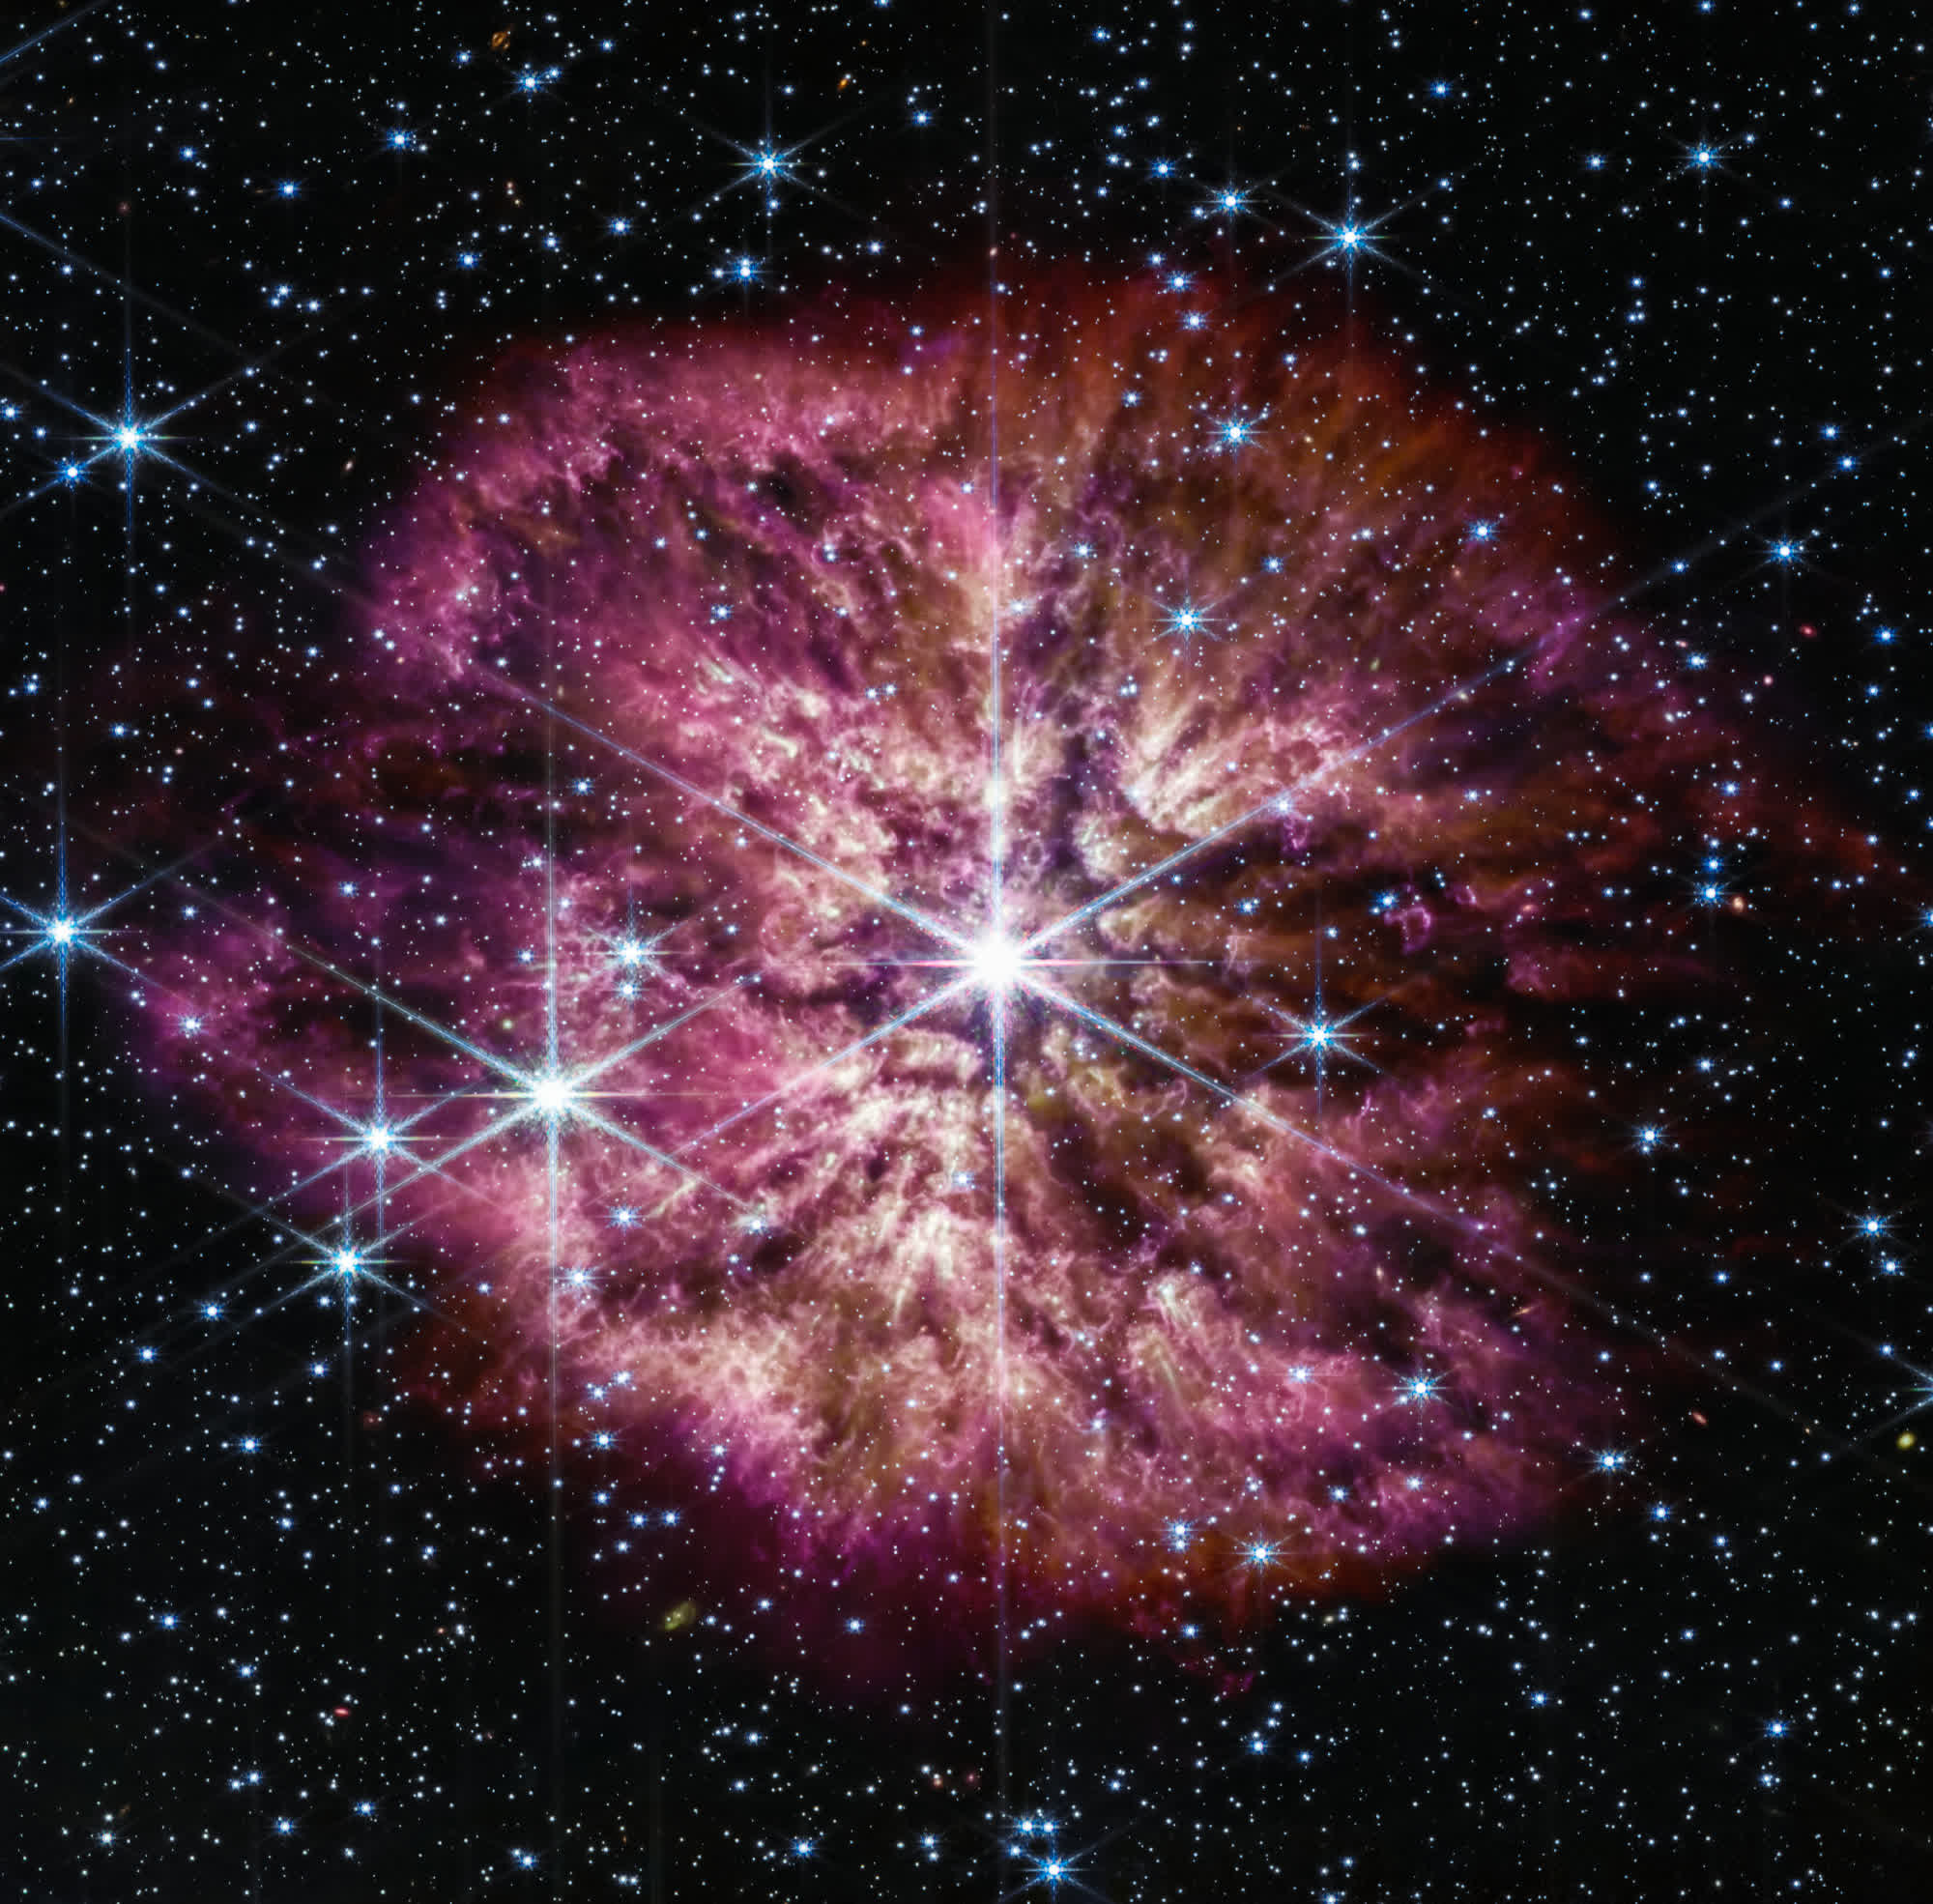 James Webb Space Telescope captures a star going Supernova in unprecedented detail